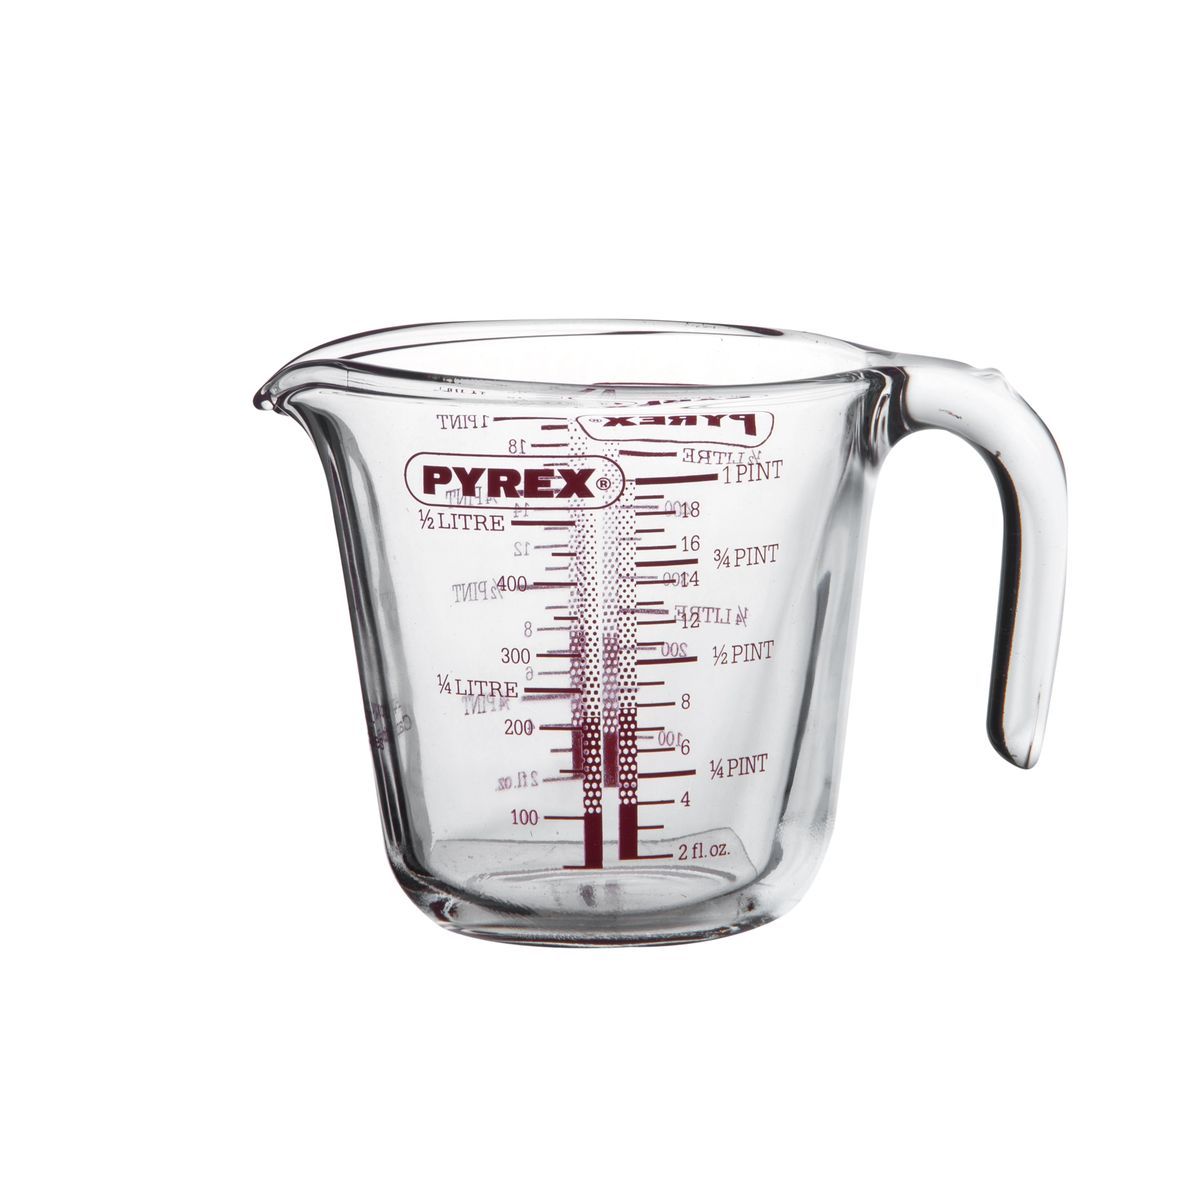 Messbecher Pyrex, Glas, 0,5 l, Messbecher & Messlöffel